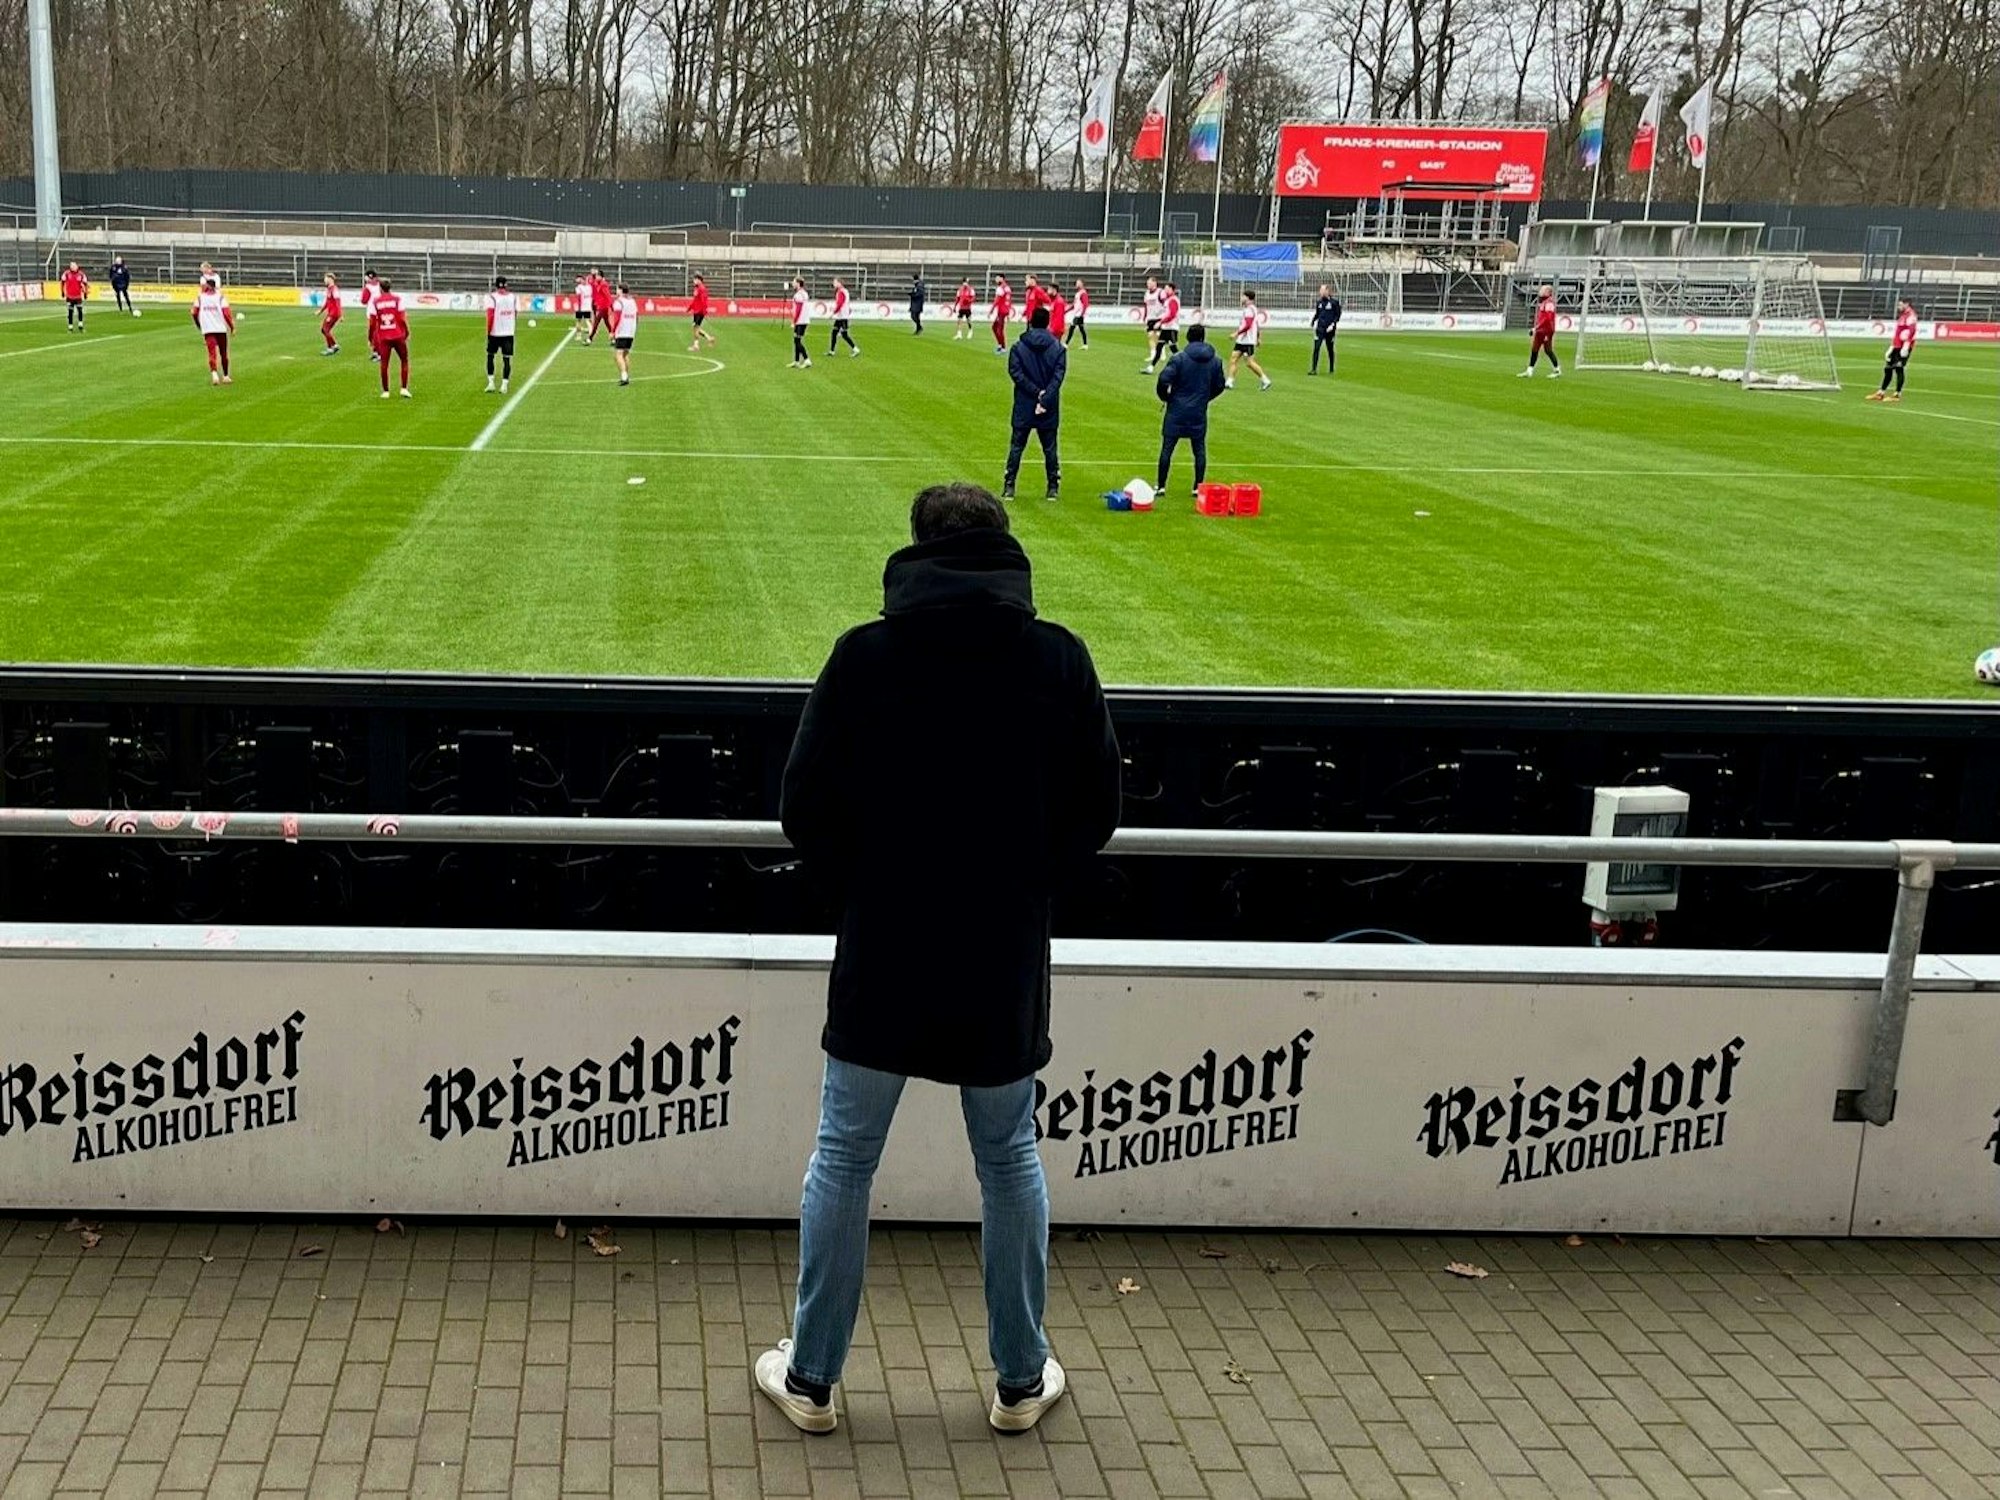 Christian Keller beobachtet das Training der FC-Profis im Franz-Kremer-Stadion.